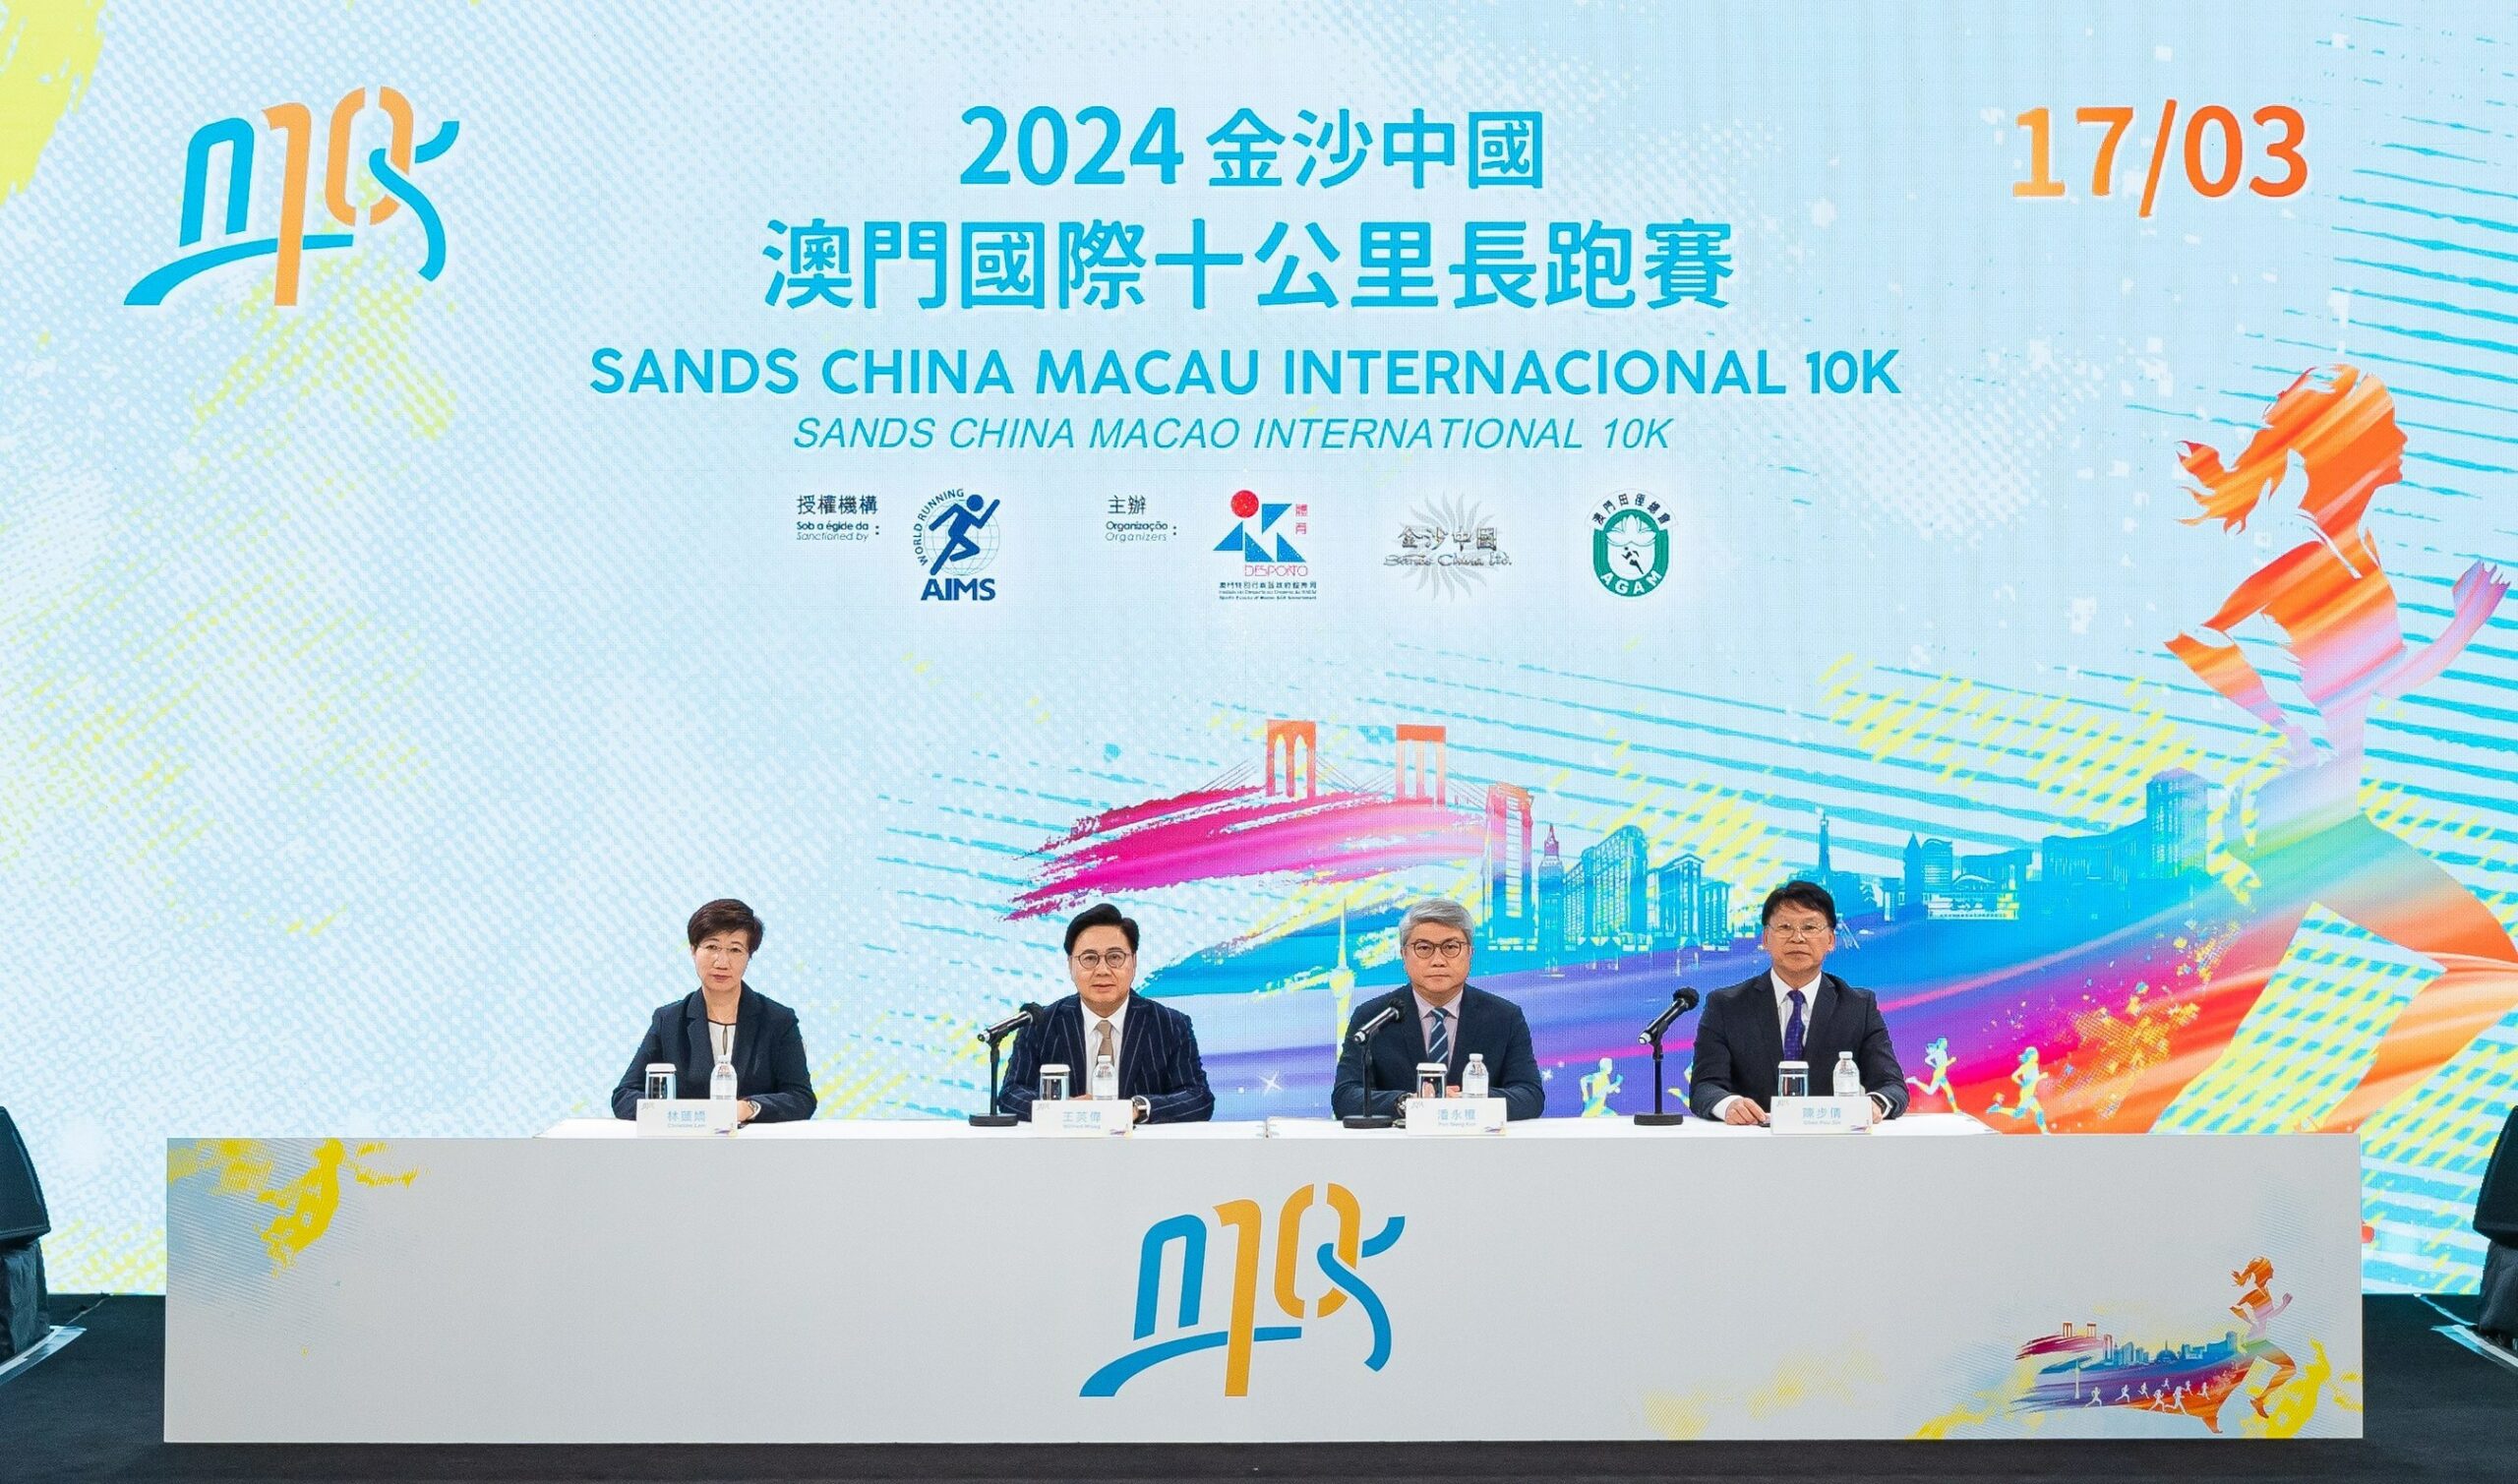 2024 Sands China Macao International 10K - Press Conference